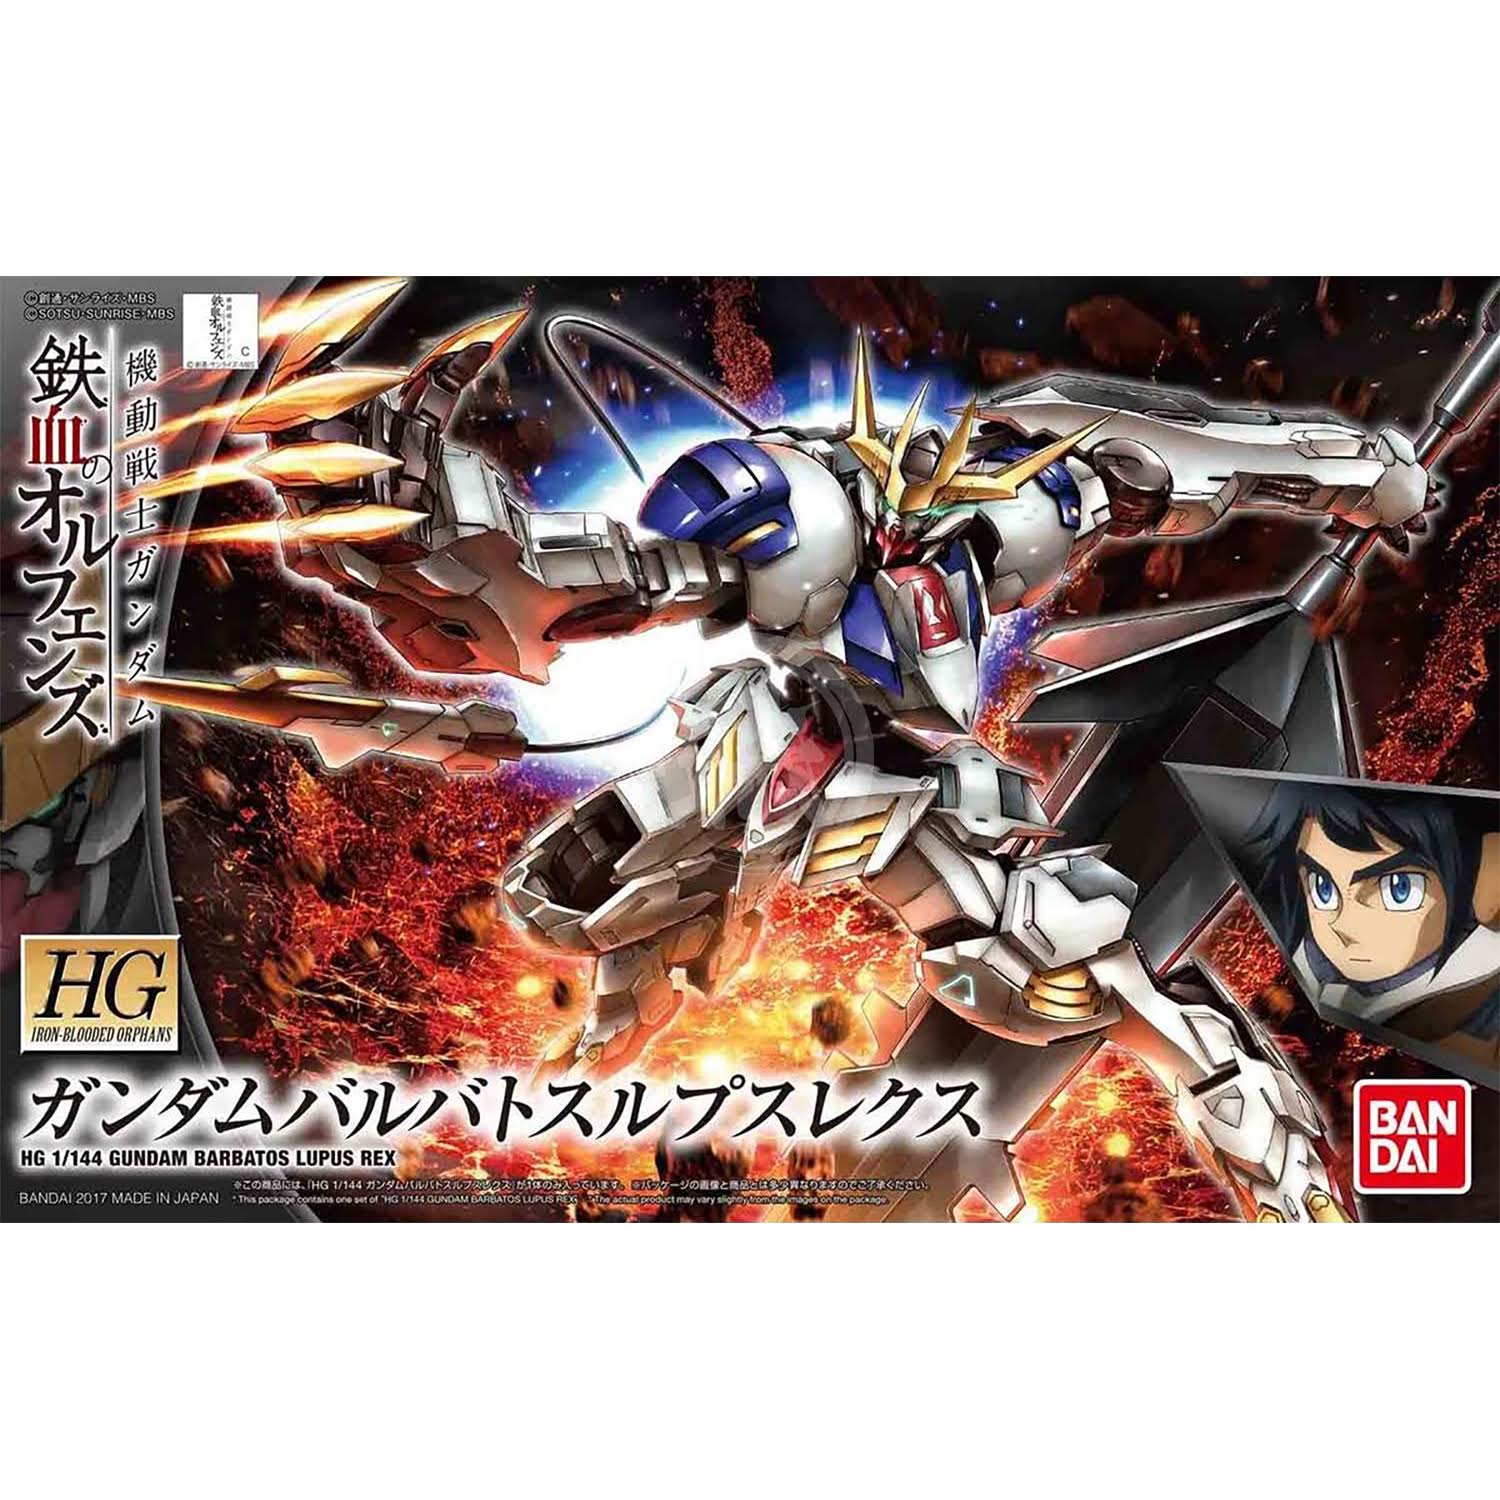 Bandai Barbatos Lupus Rex Gundam Model Kit - 1/144 Scale